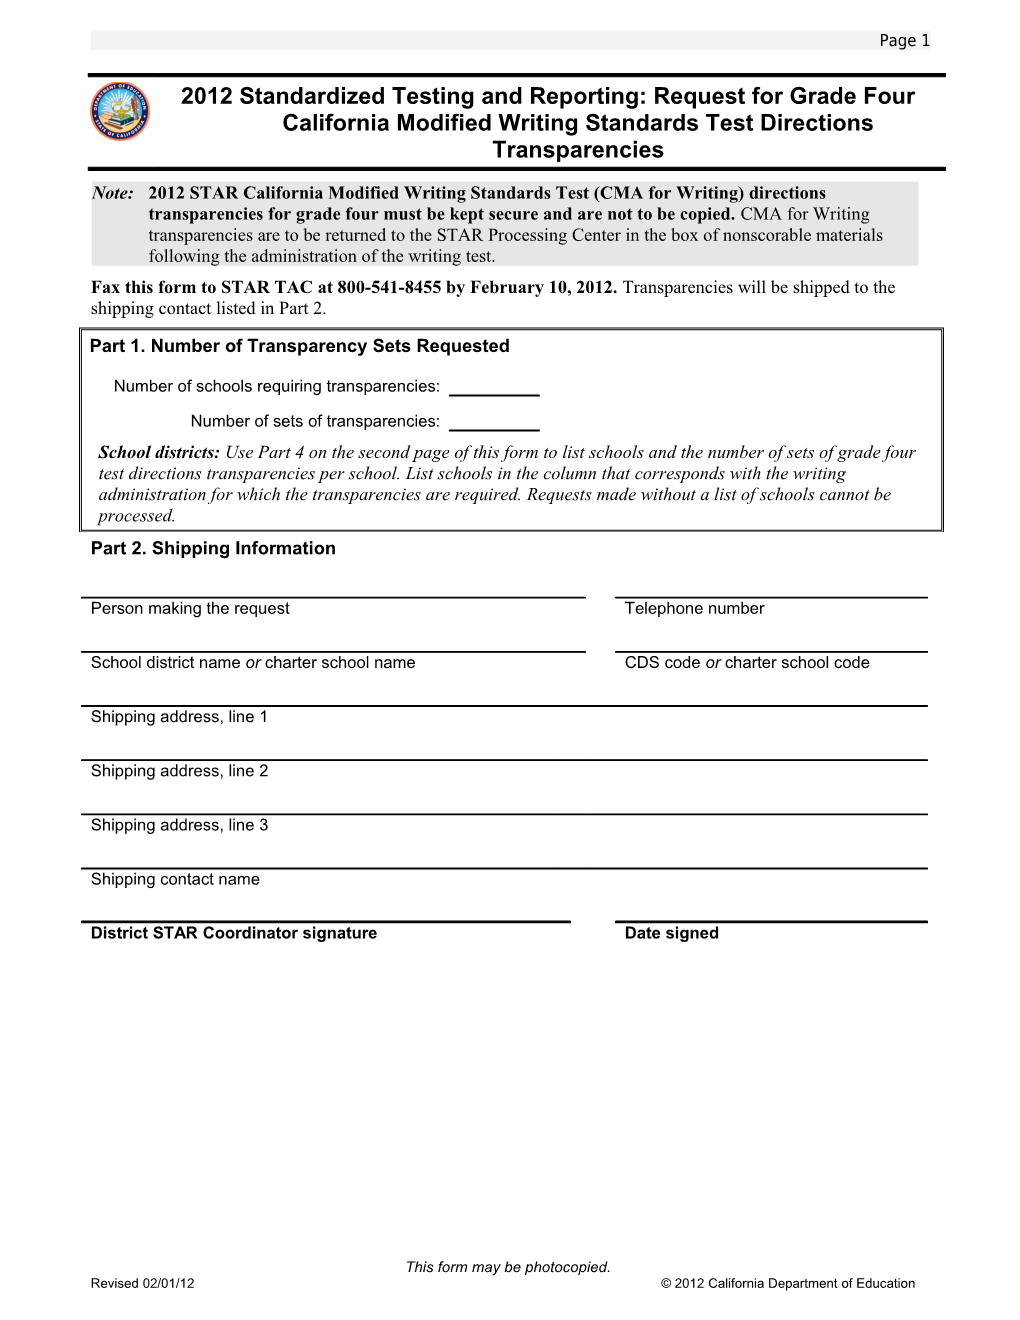 STAR Grade 4 Writing Transparencies Request Form